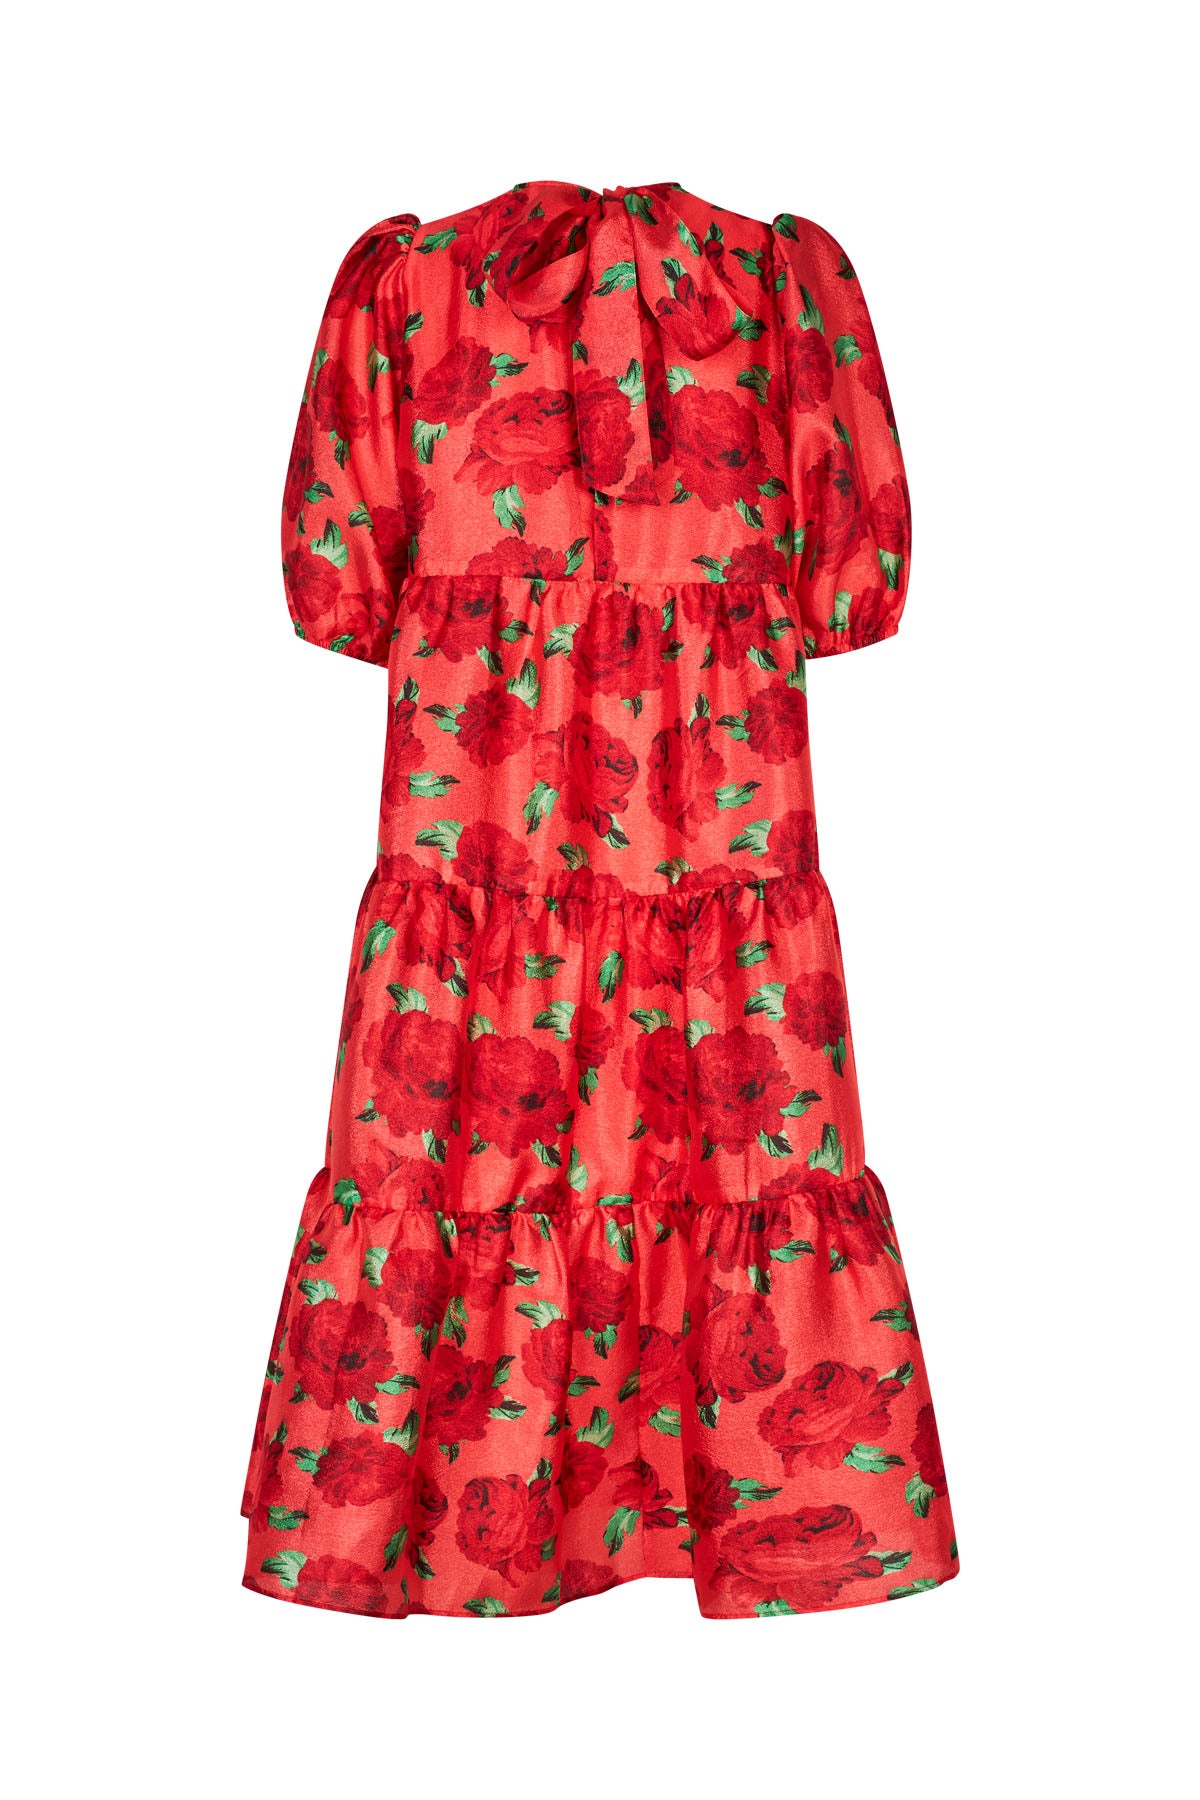 CRAS Lili Dress Dress 8019 Coral Roses